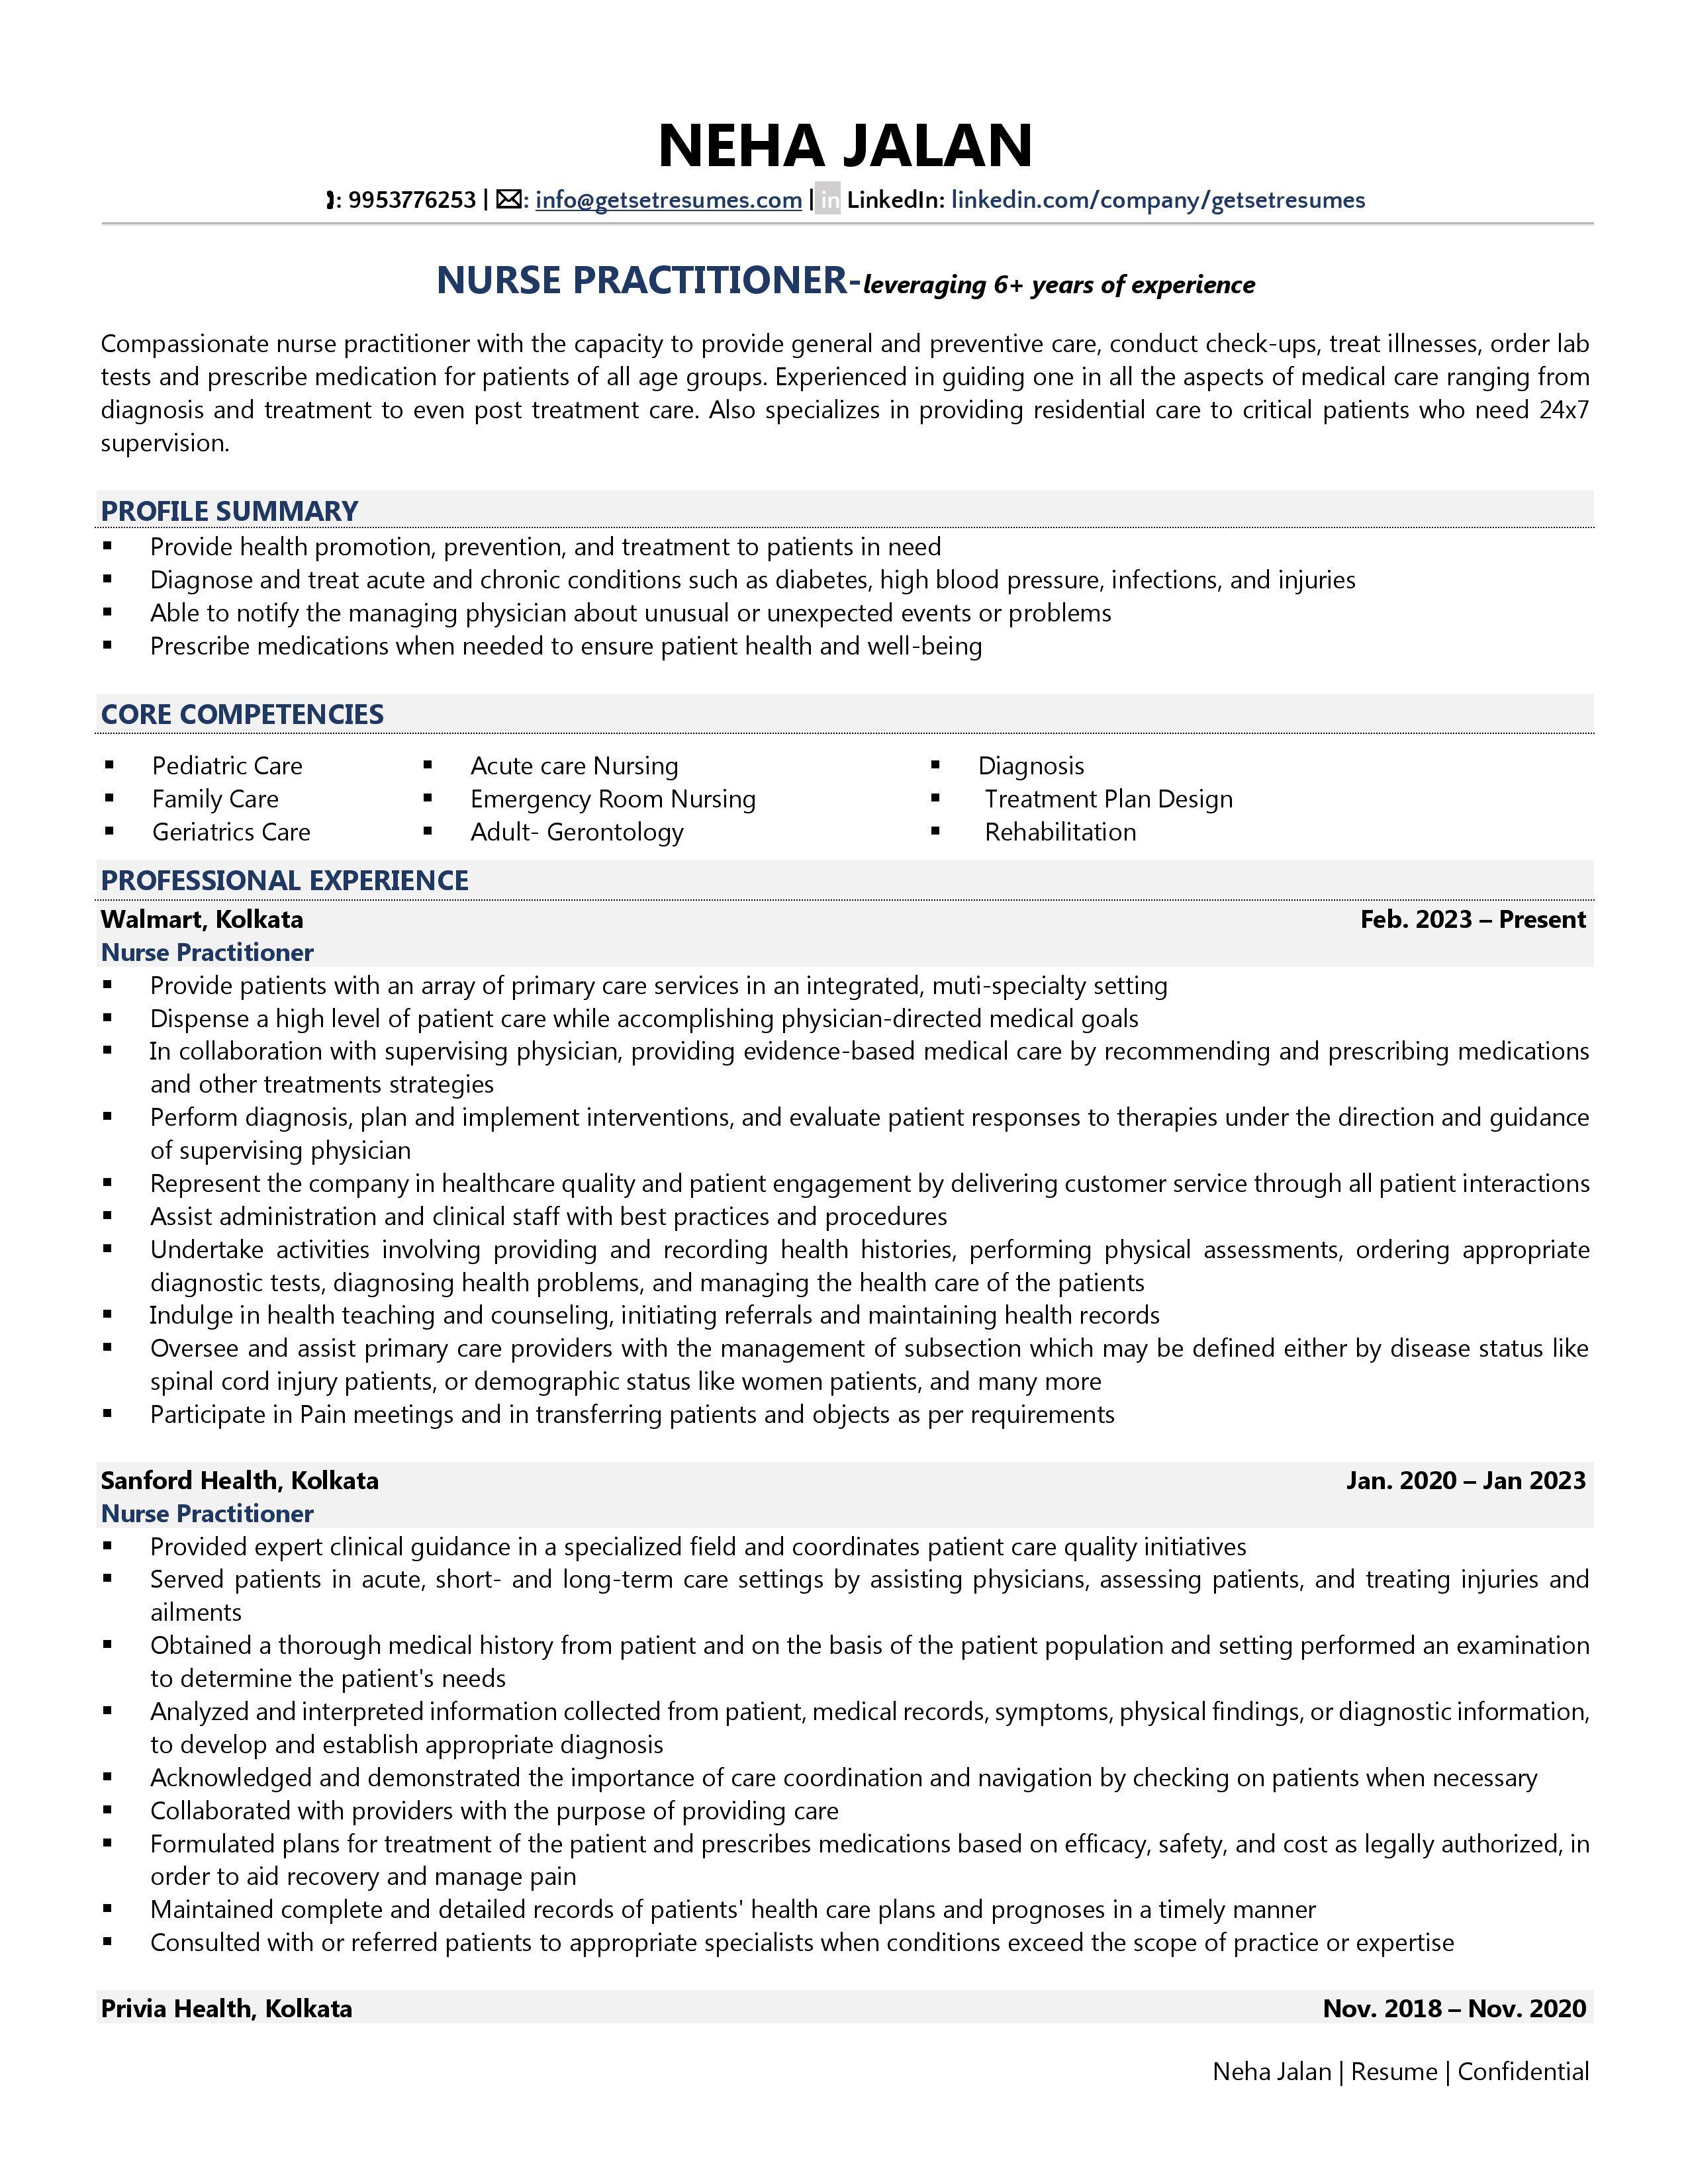 Nurse Practitioner - Resume Example & Template